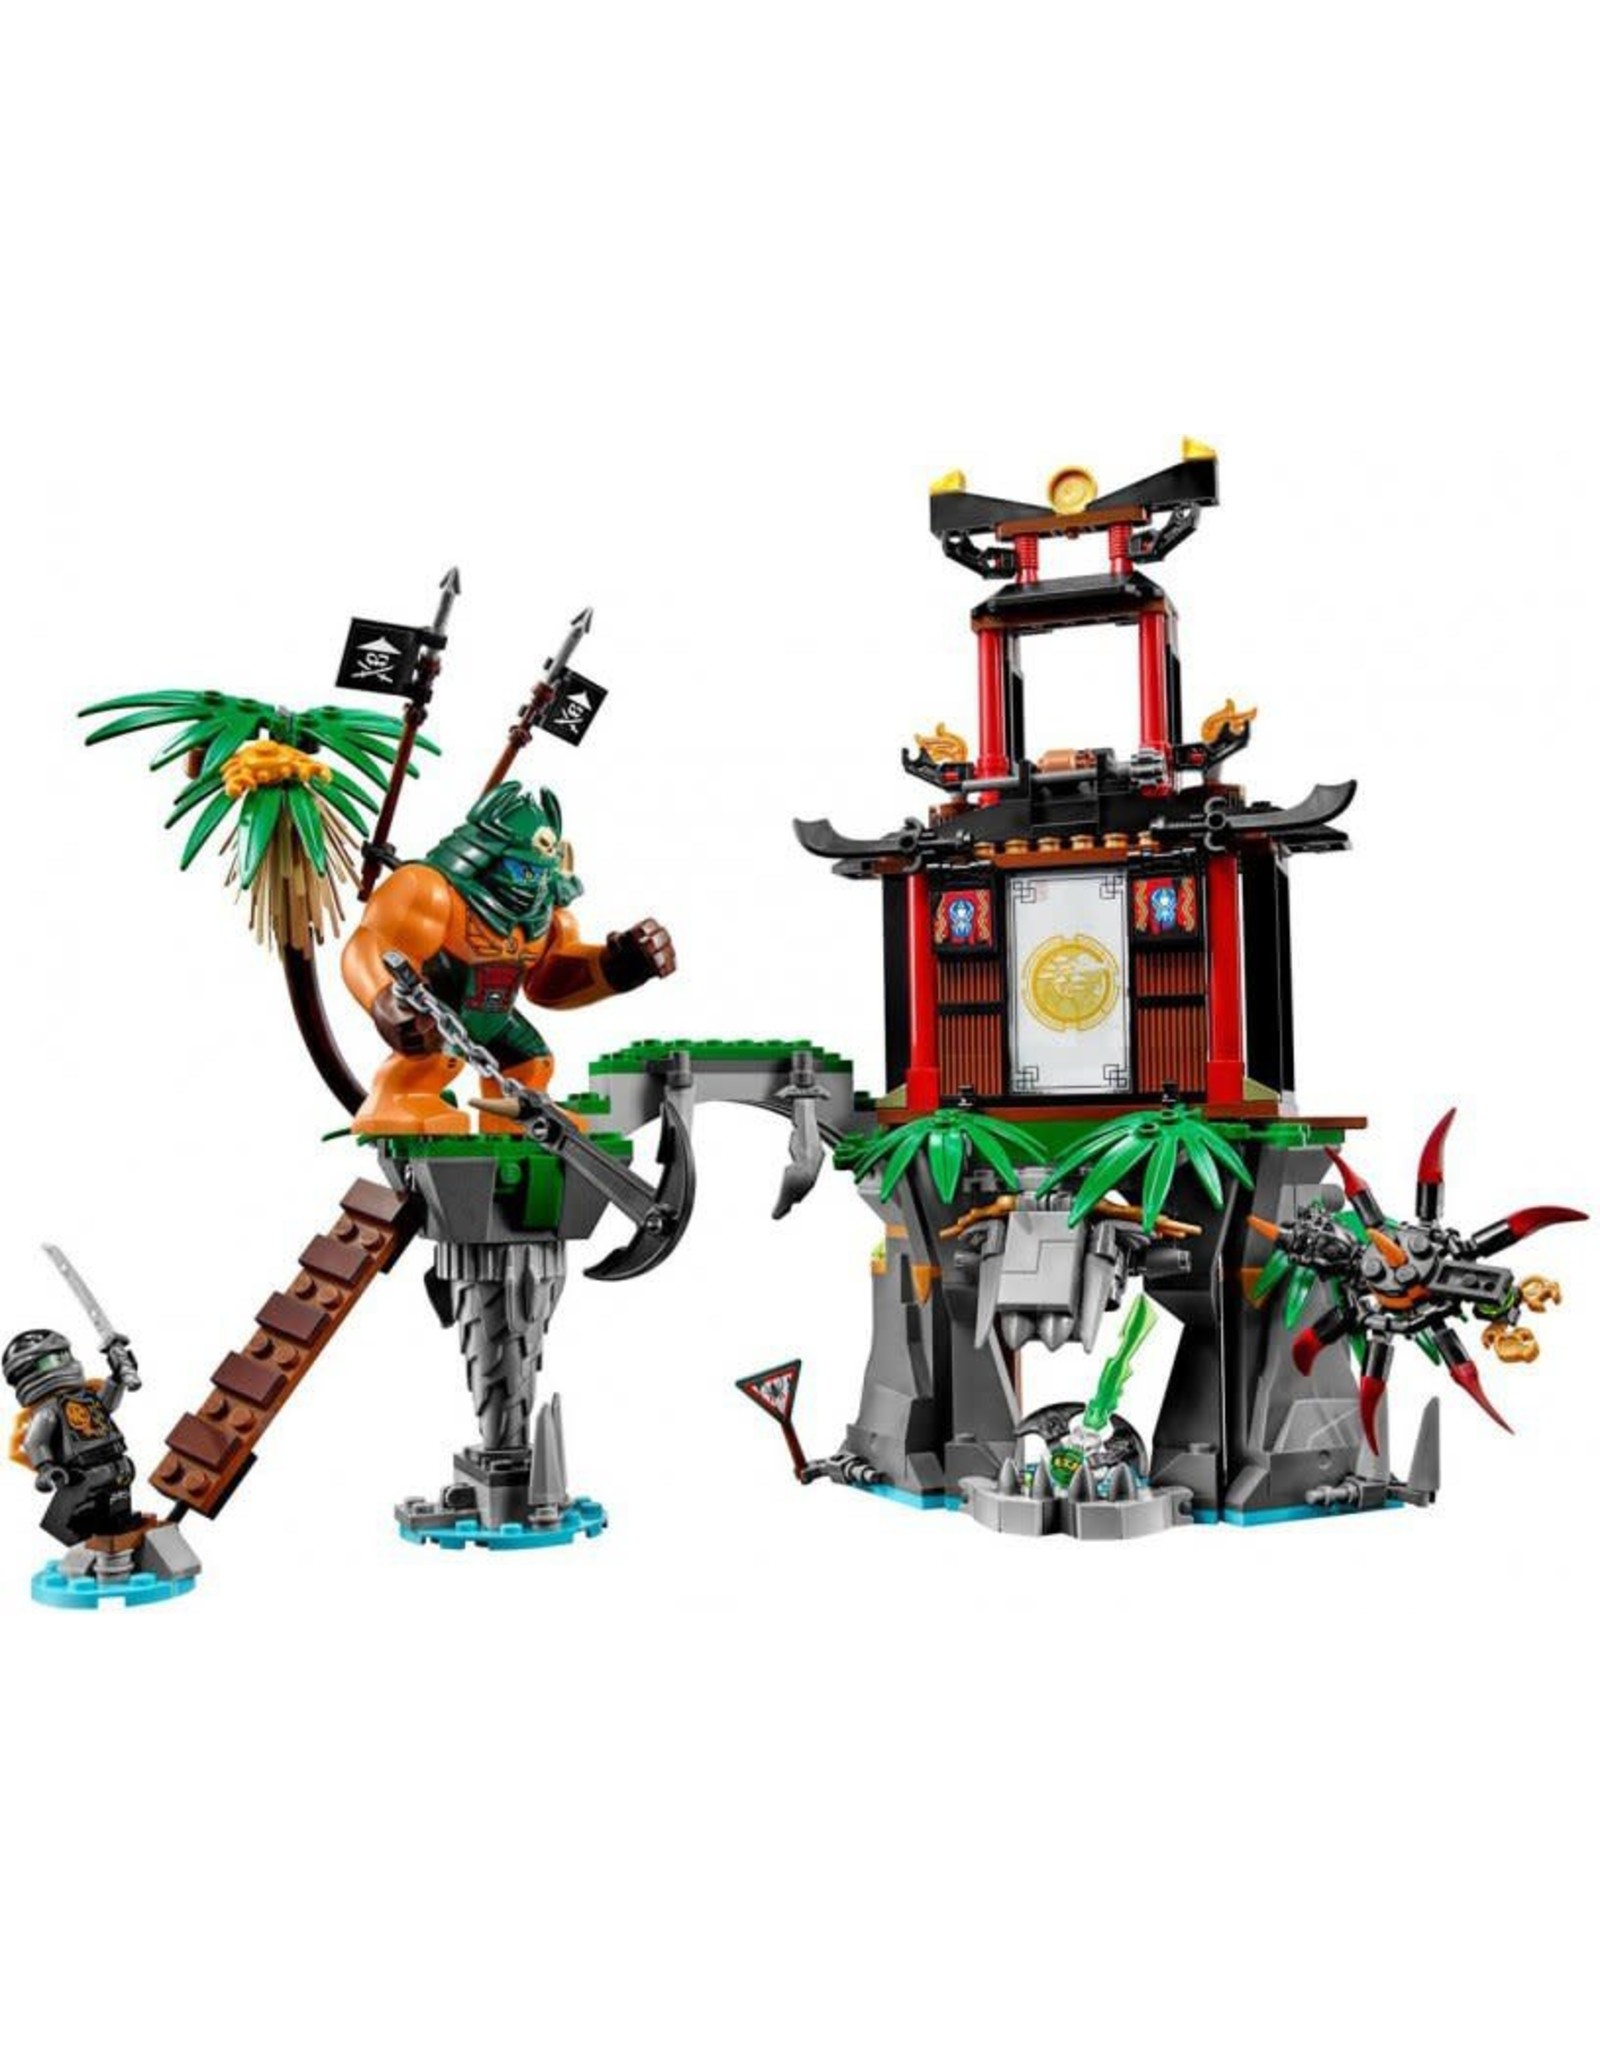 LEGO Lego Ninjago 70604 Tiger Widow Eiland - Tiger Widow Island